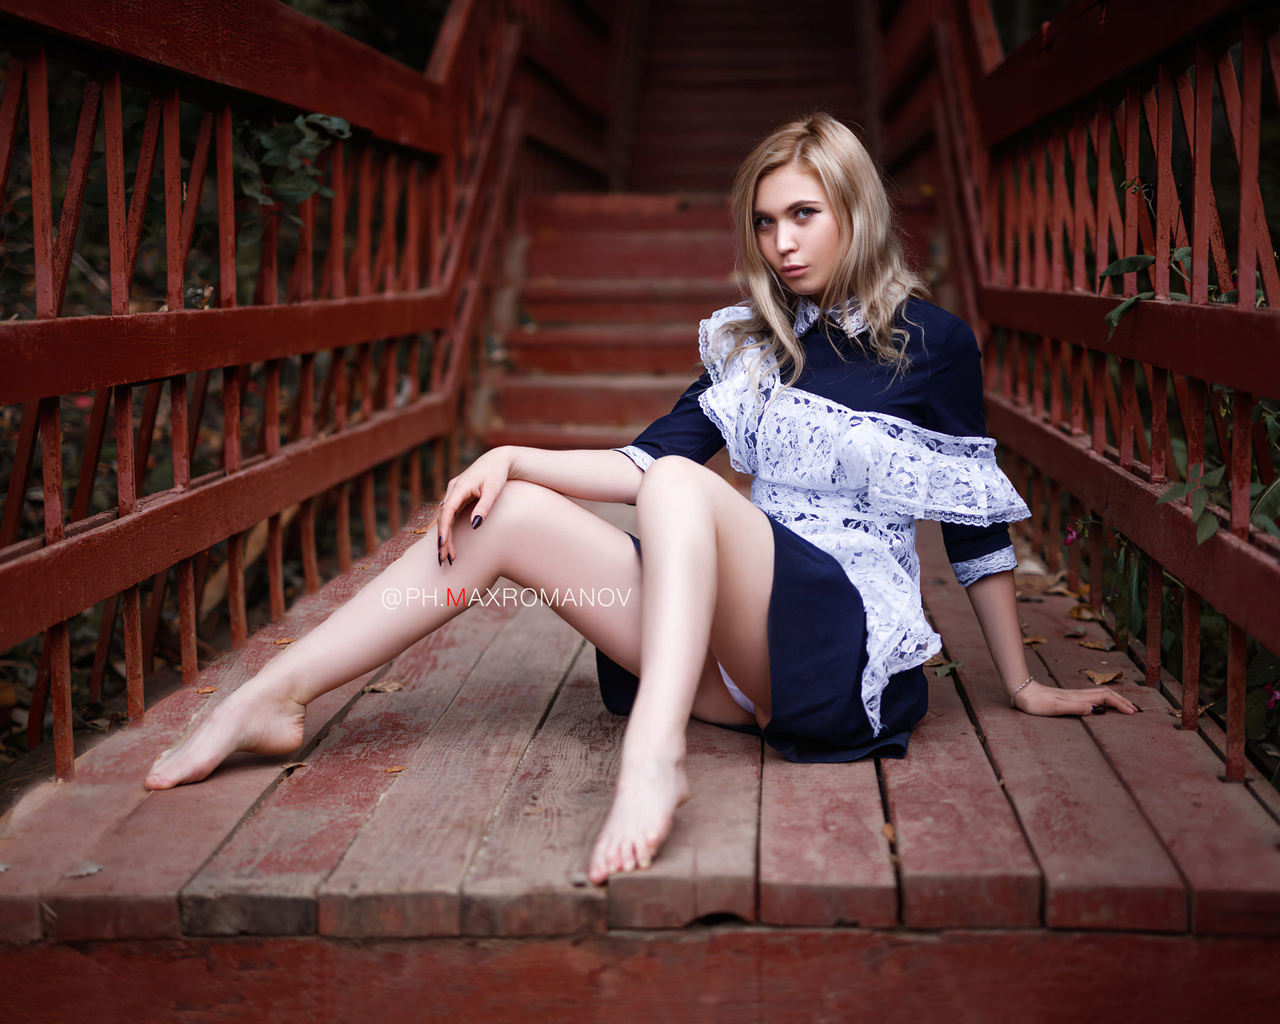 women, maksim romanov, blonde, sitting, wood, women outdoors, blue dress, white panties, painted nails, stairs